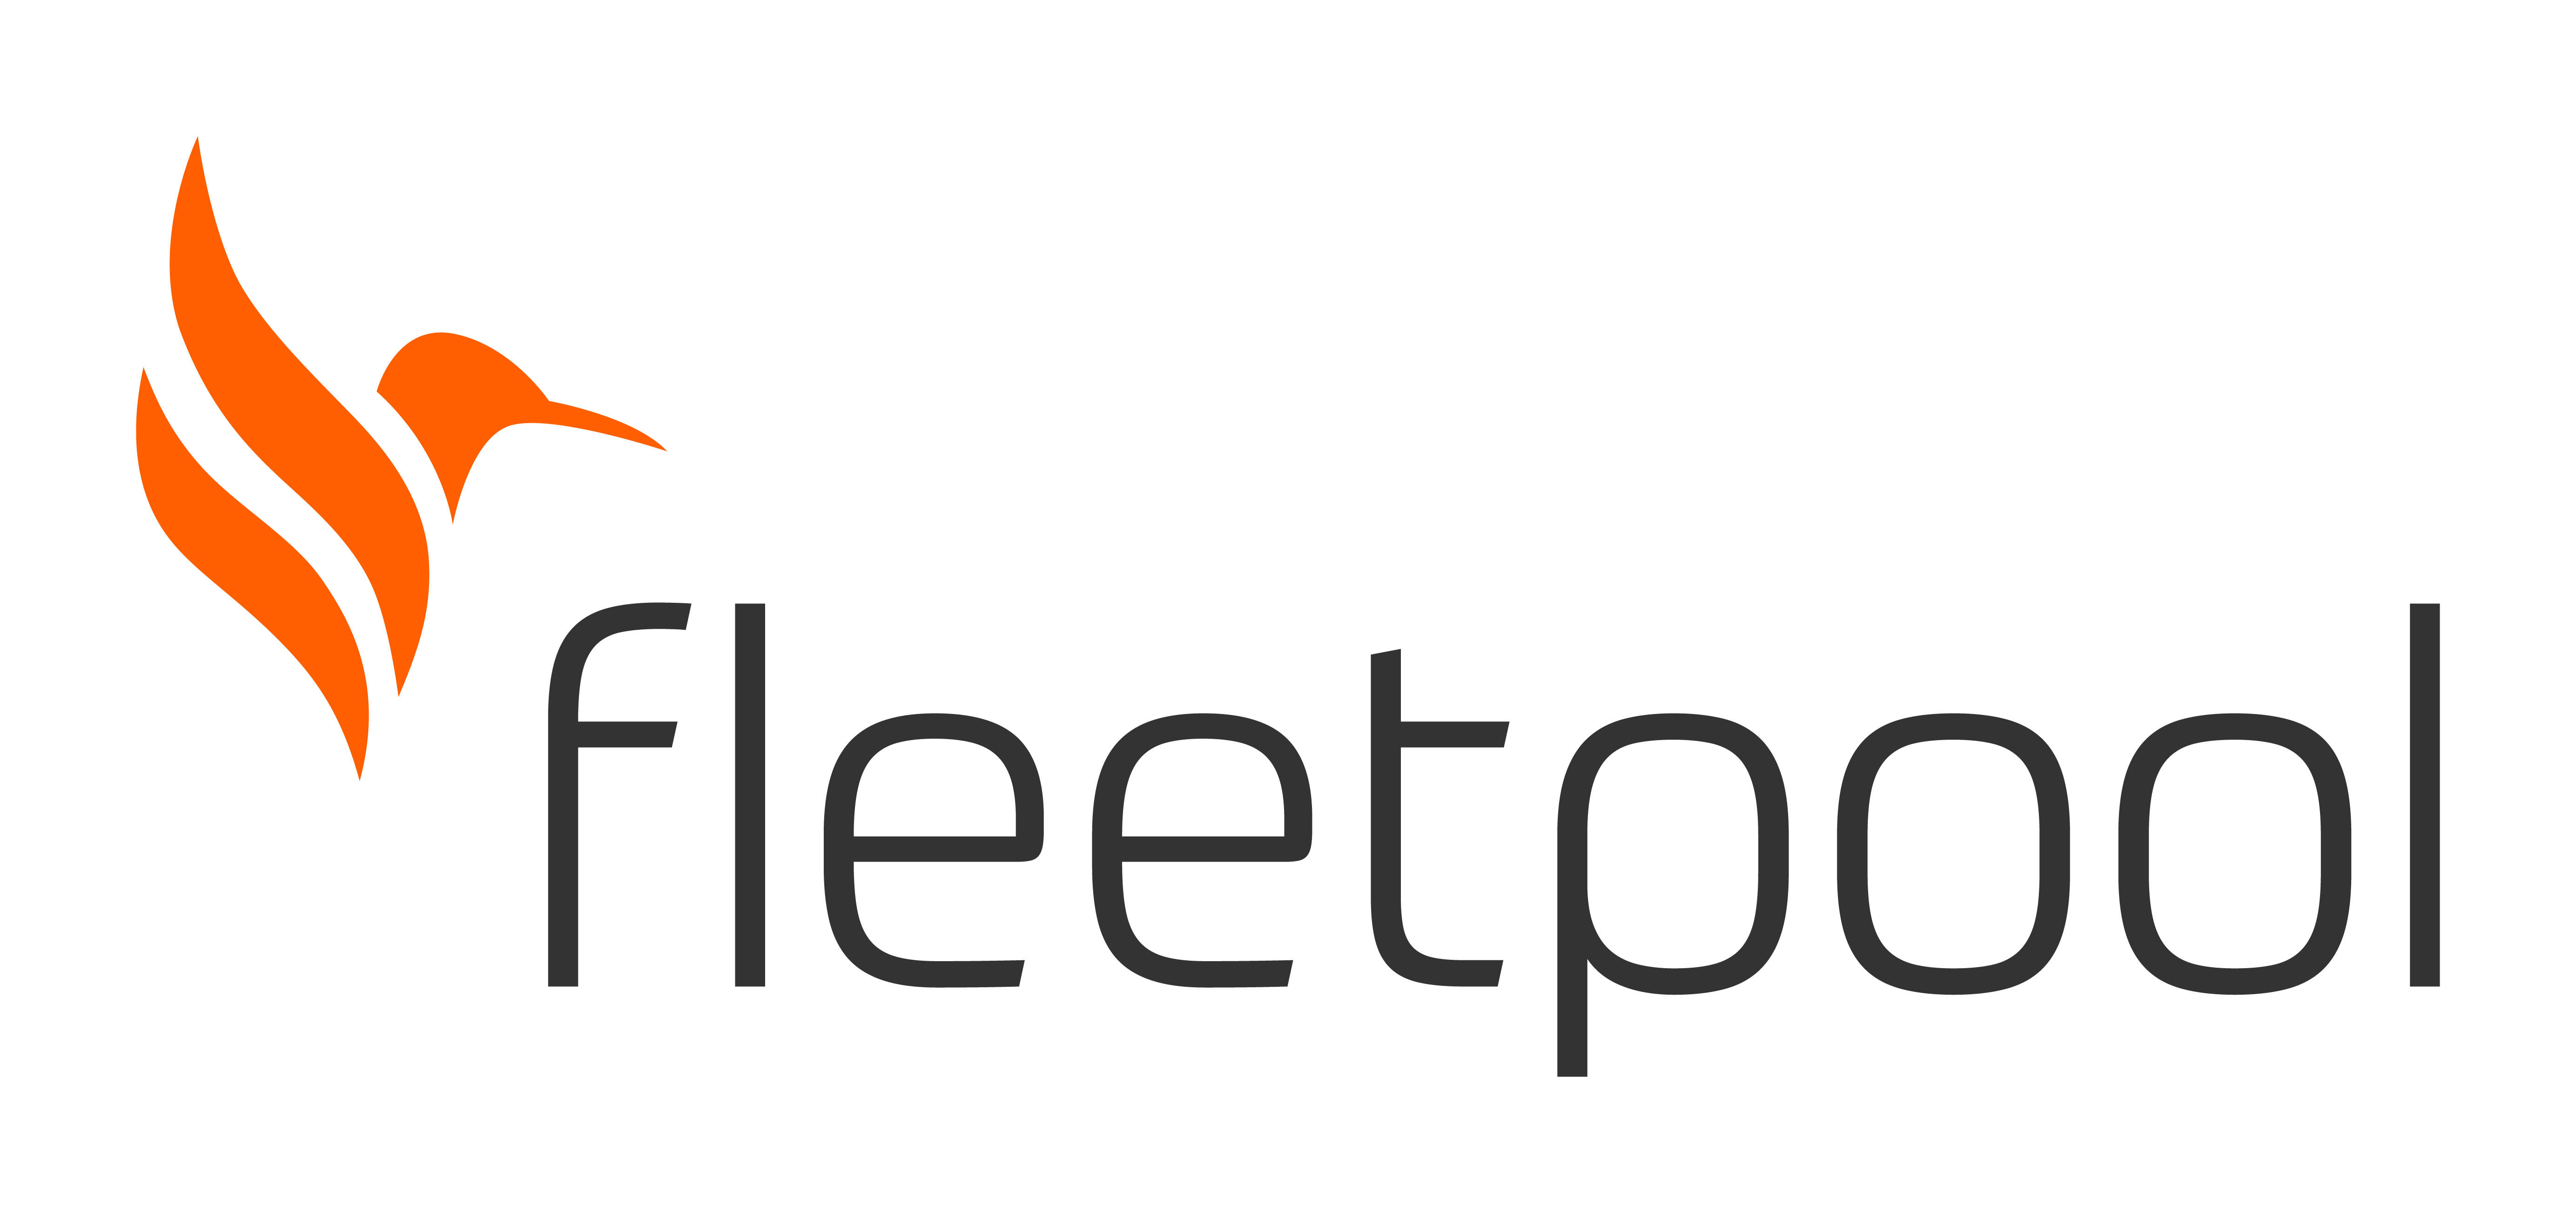 Fleetpool GmbH Logo